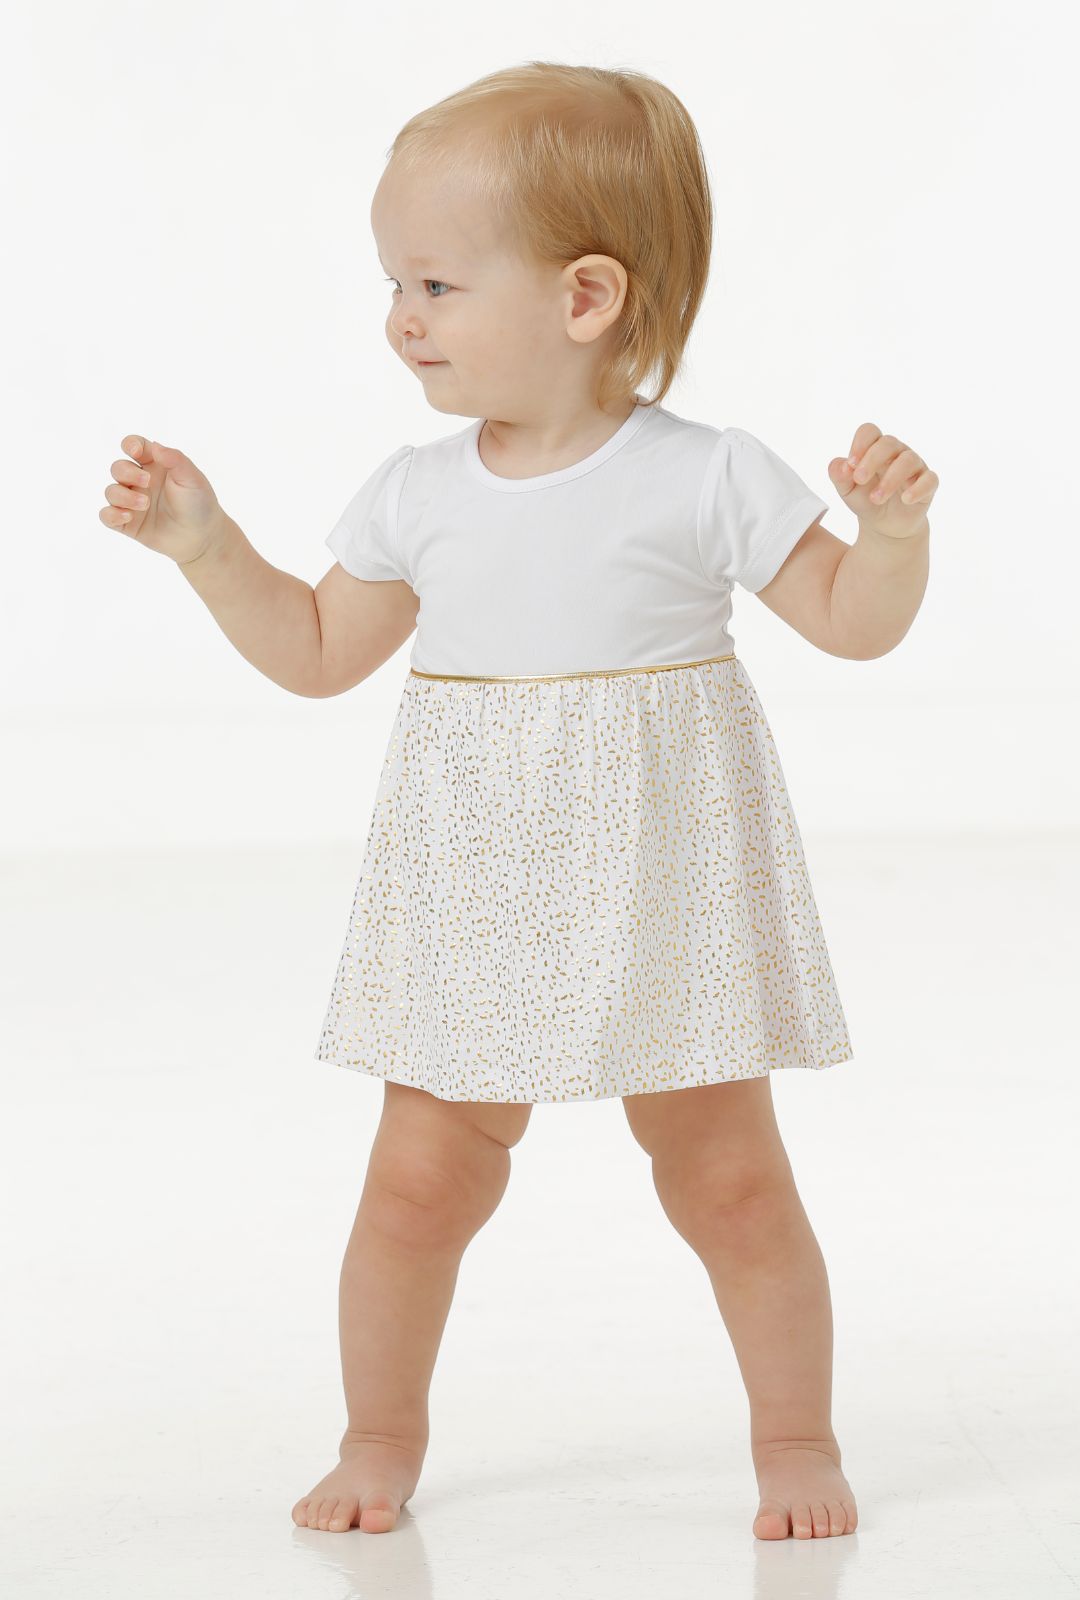 Kaylee Infant Girls' Dress